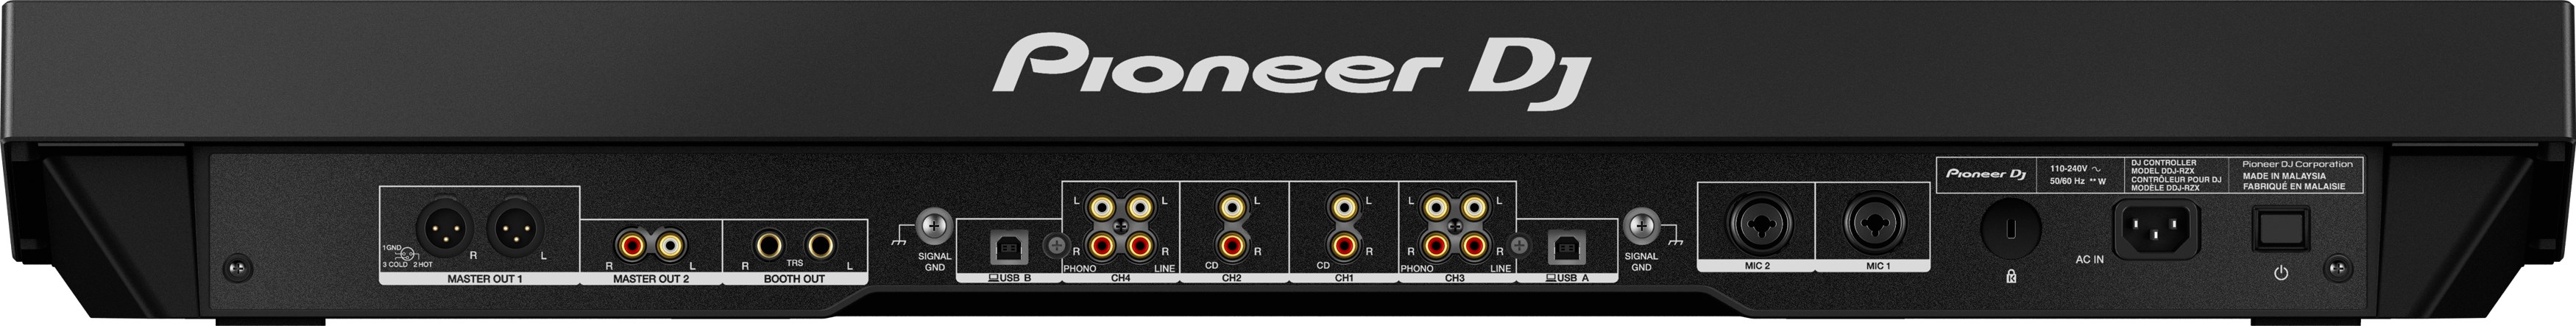 Pioneer Dj Ddj-rzx - USB DJ controller - Variation 3